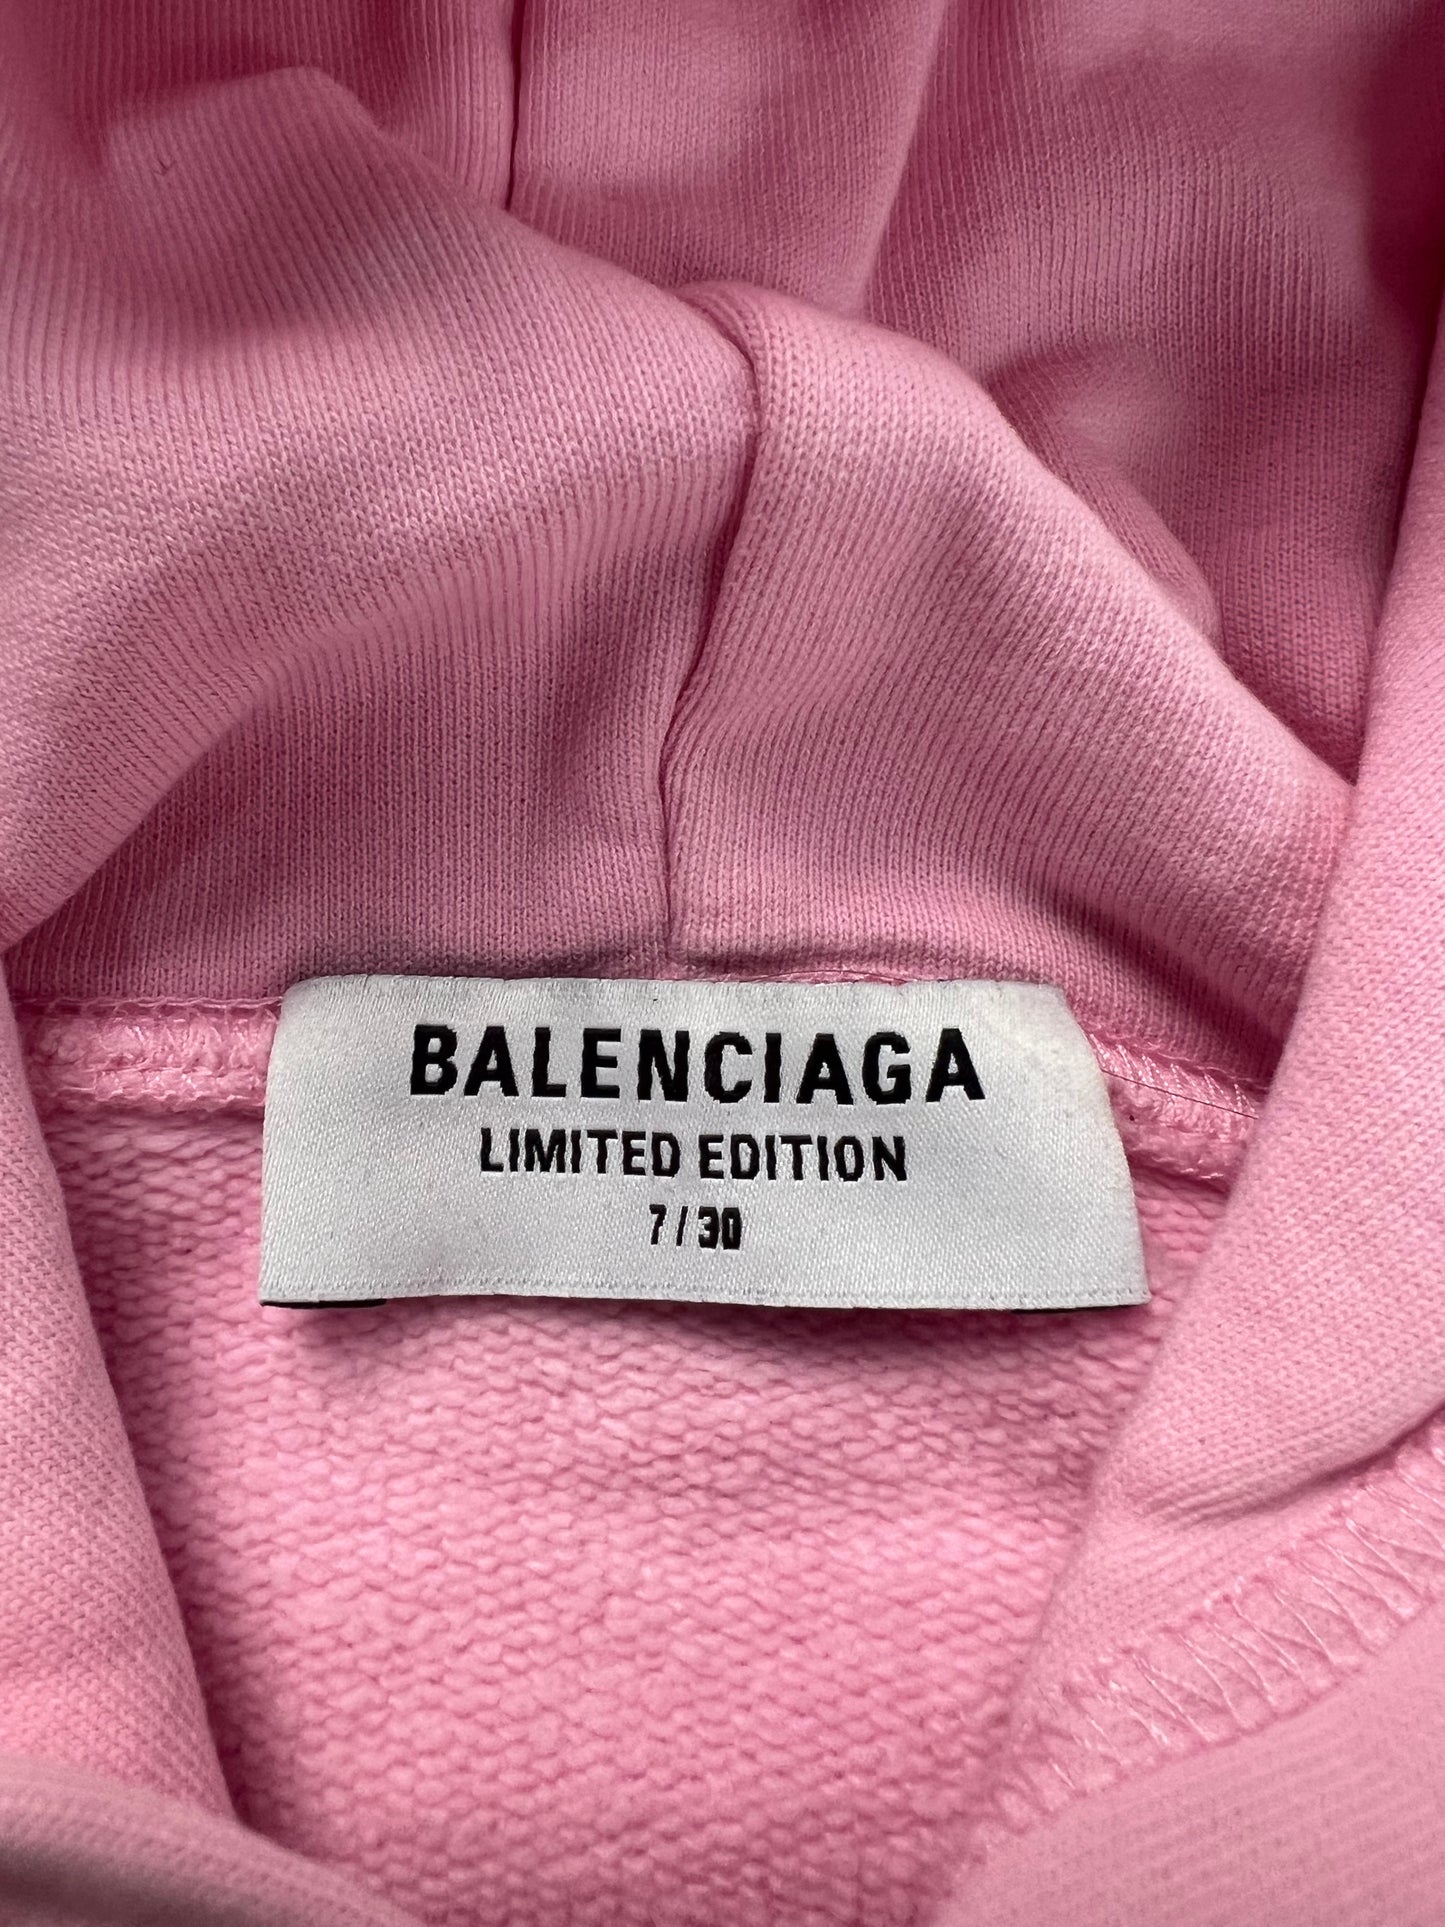 Balenciaga Venezia Exclusive Pink Hoodie 7/30 SZ:1